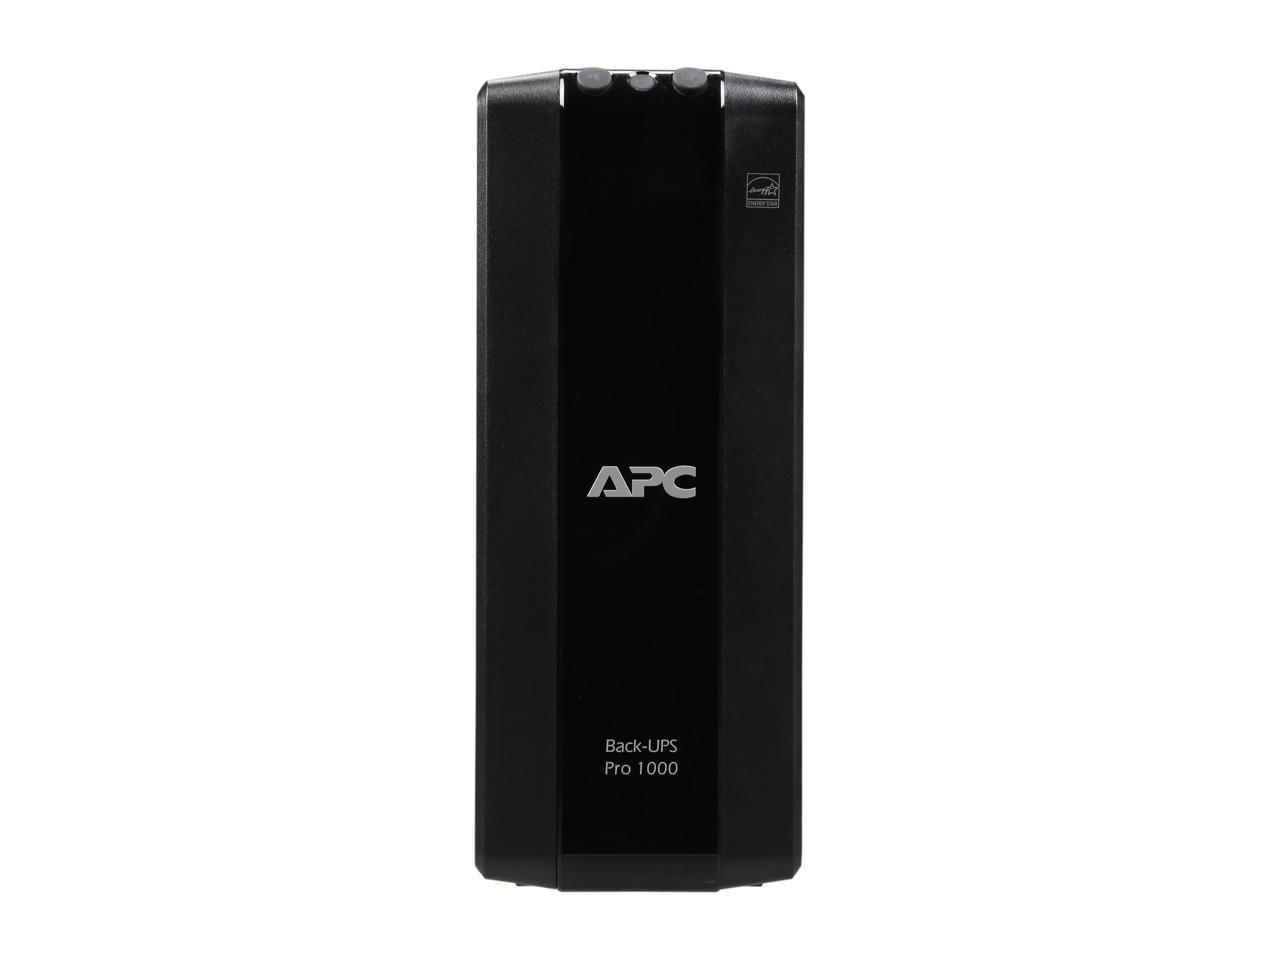 APC br1500g-RS. APC back ups Pro 1000. APC br24bpg. Battery Pack ups. Built in battery